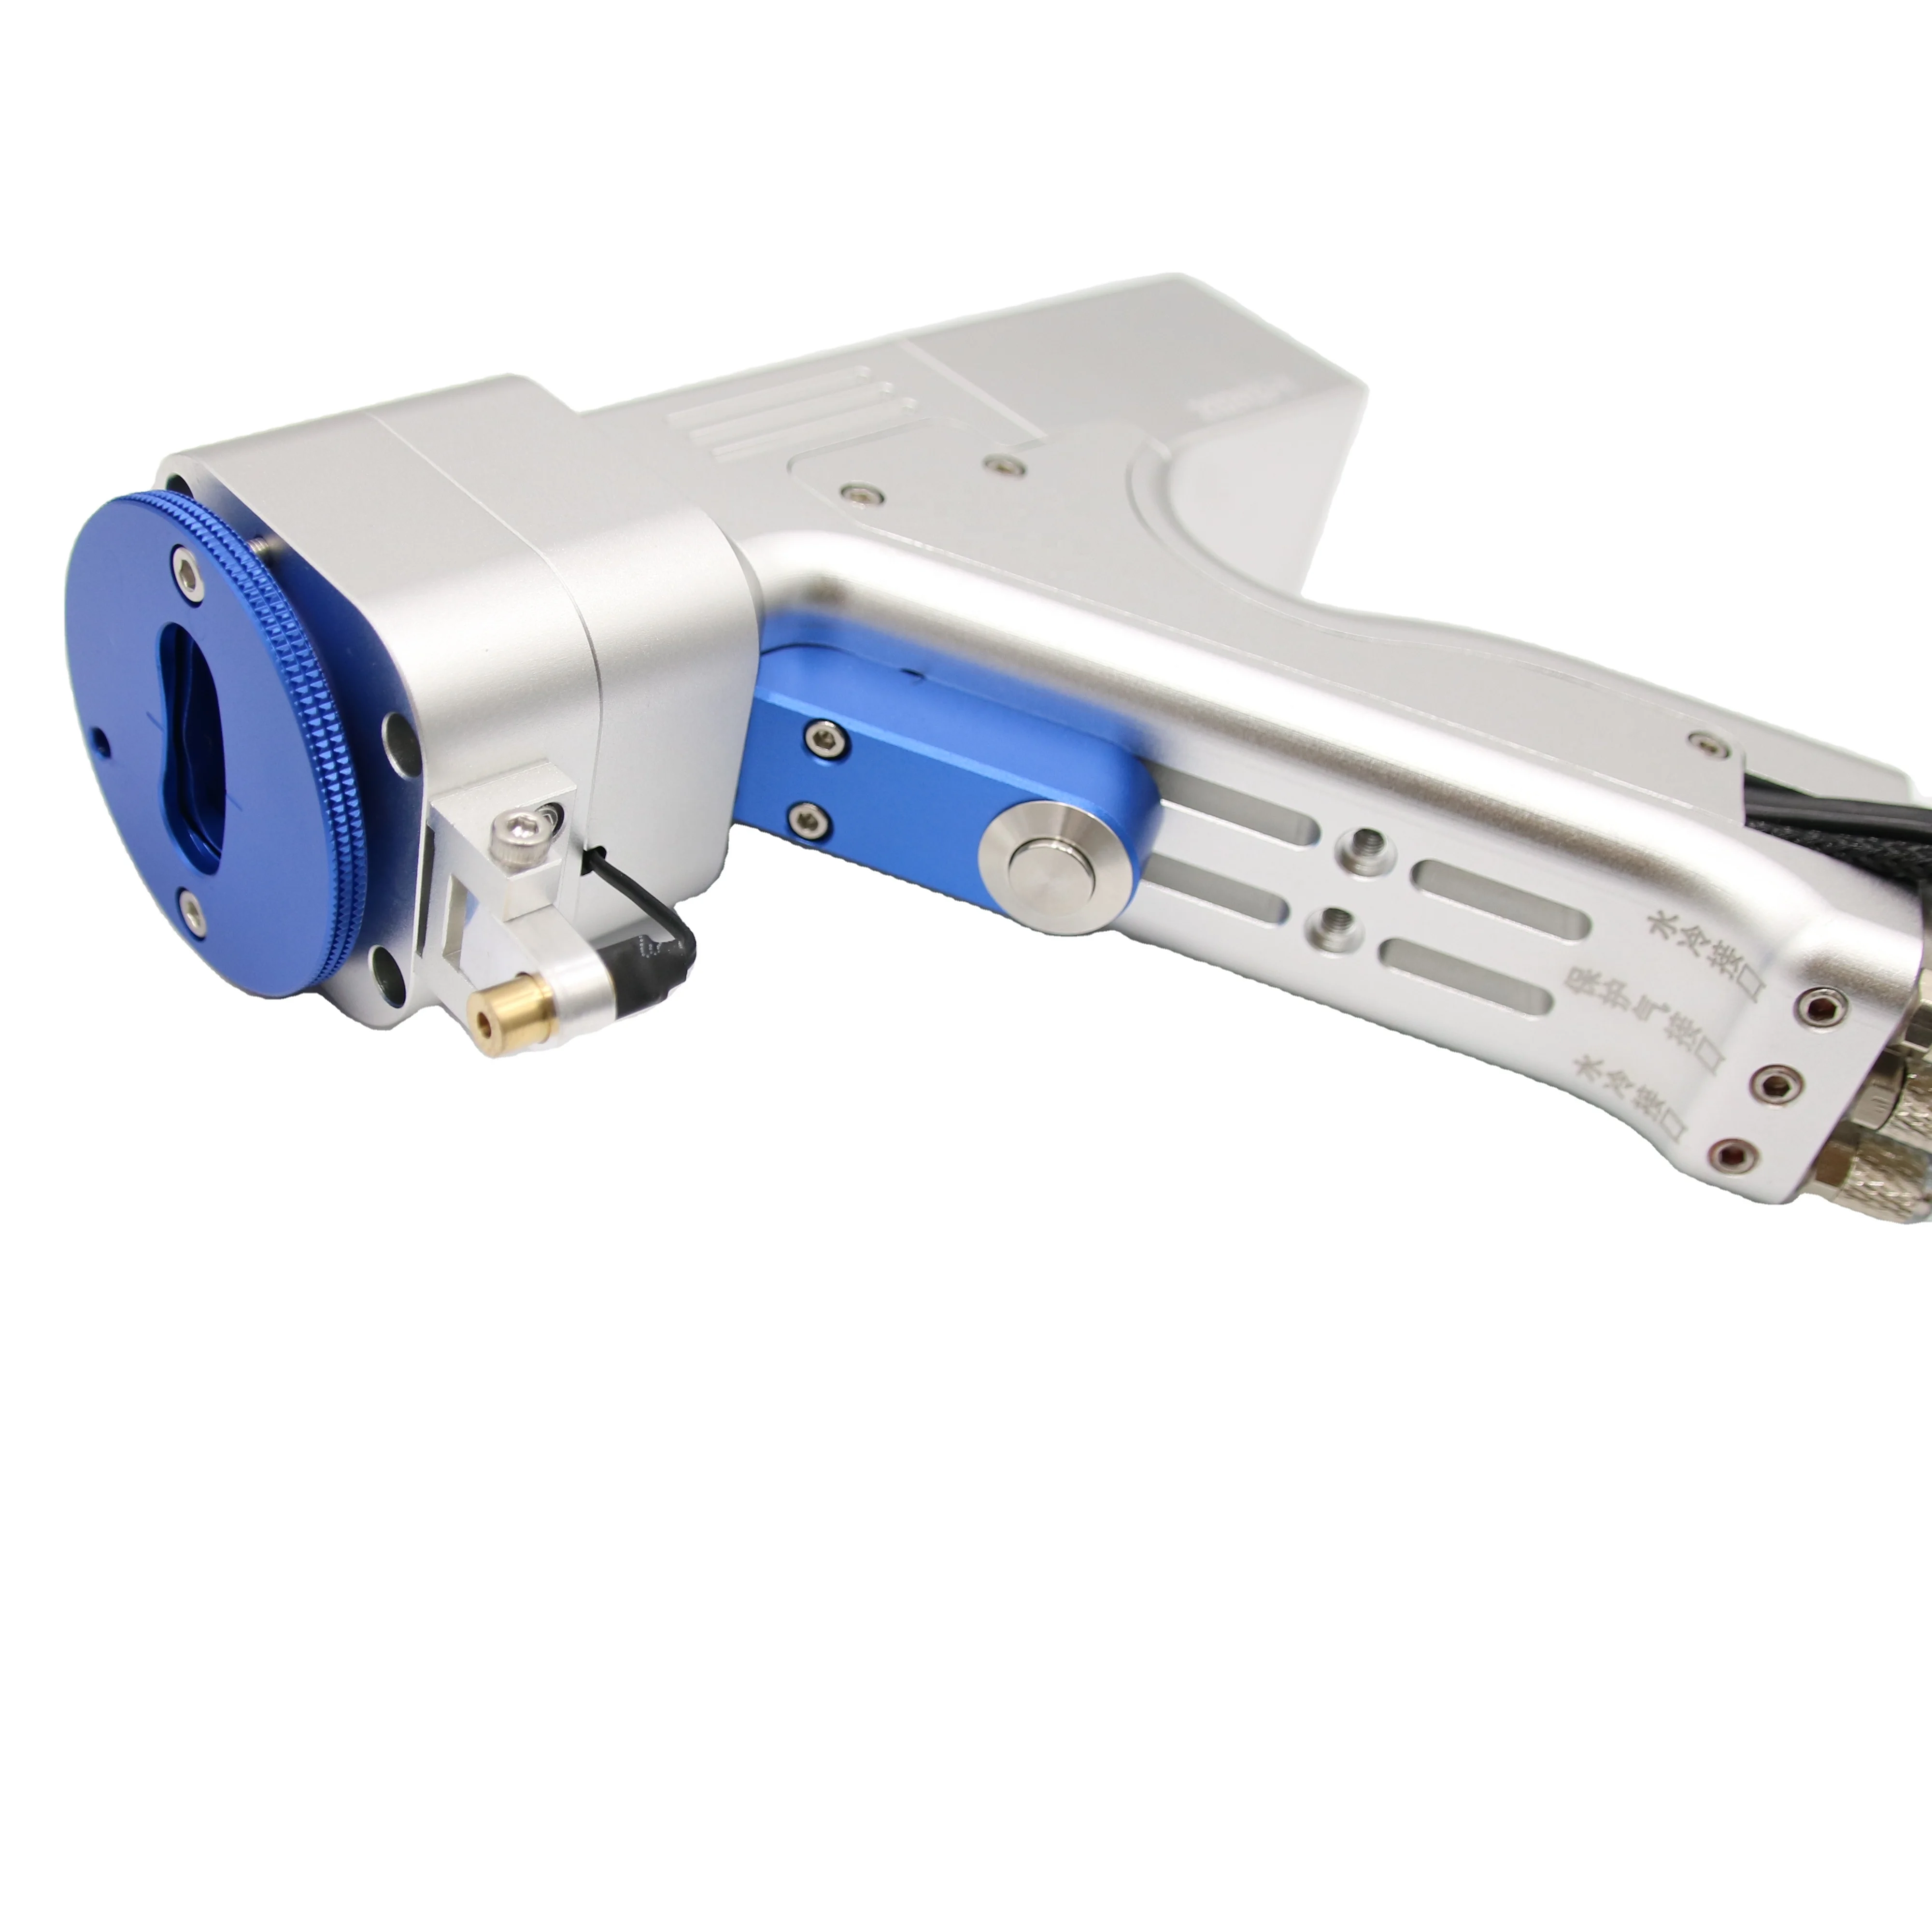 MCWlaser Machine de nettoyage laser portable 3000W Raycus Fiber